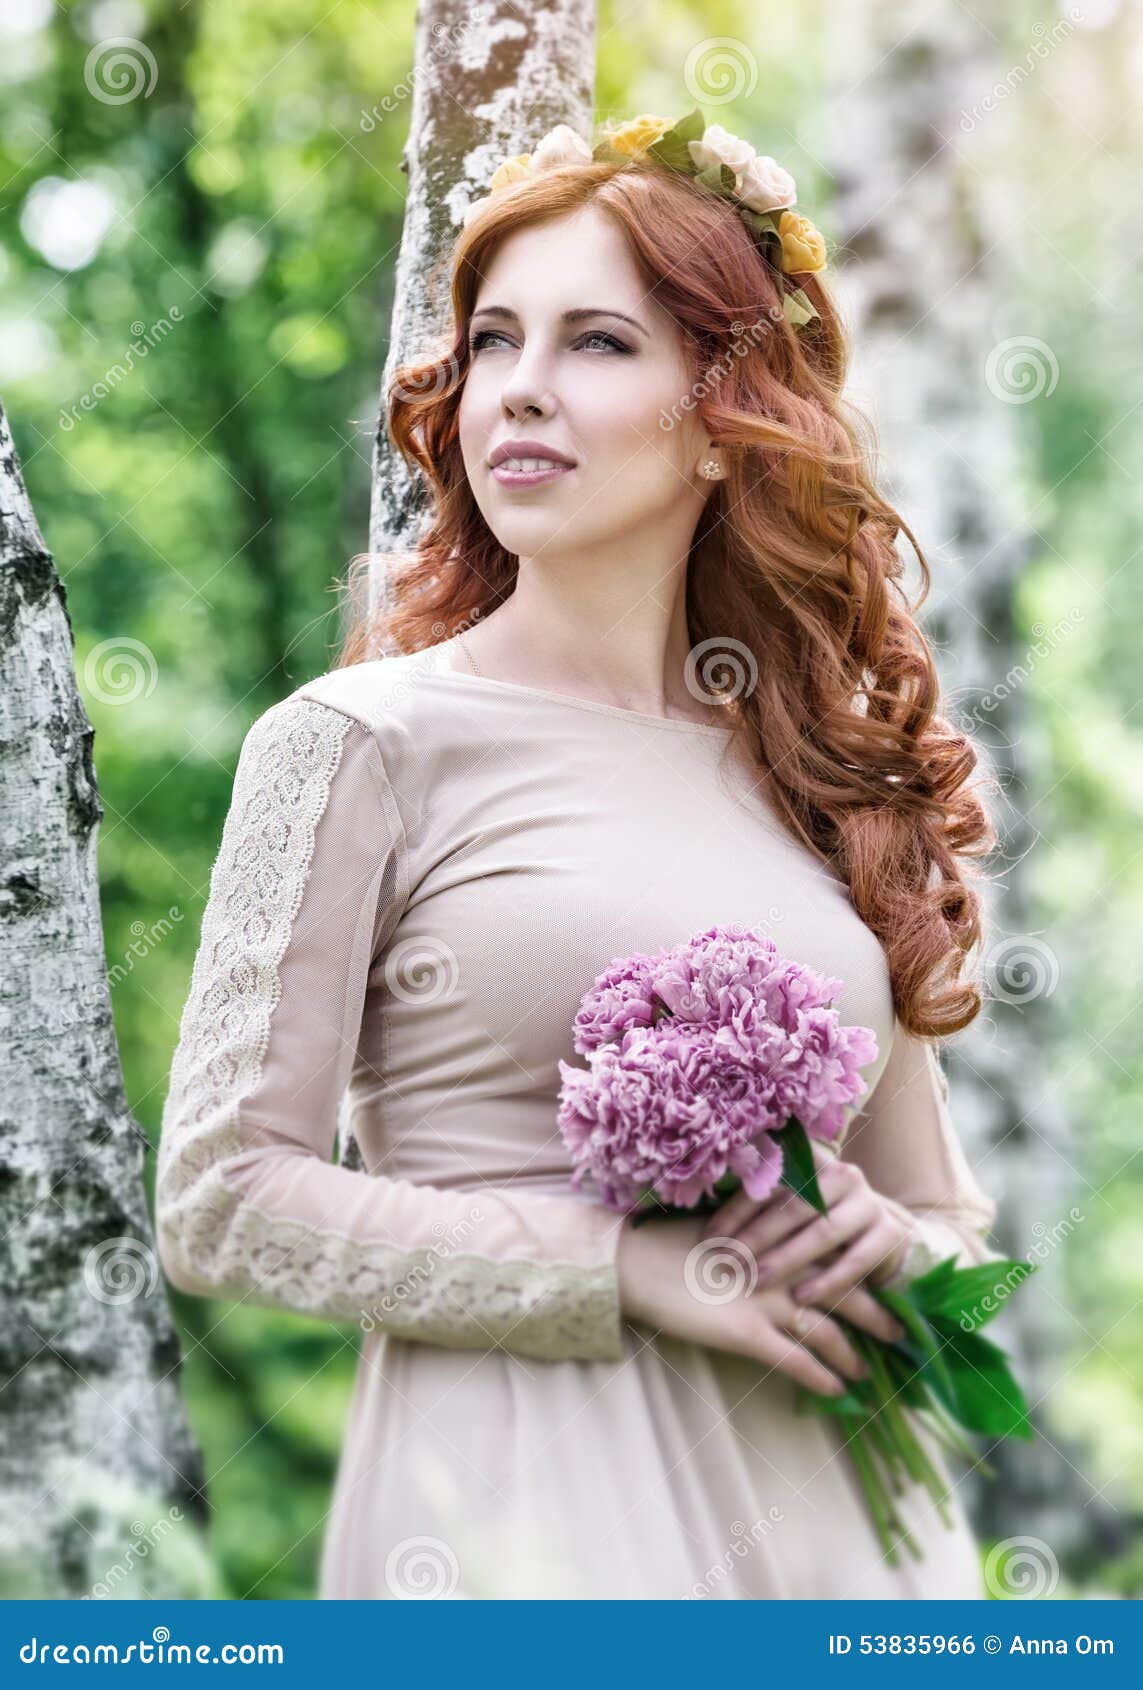 Cute dreamy bride stock photo. Image of outdoor, model - 53835966